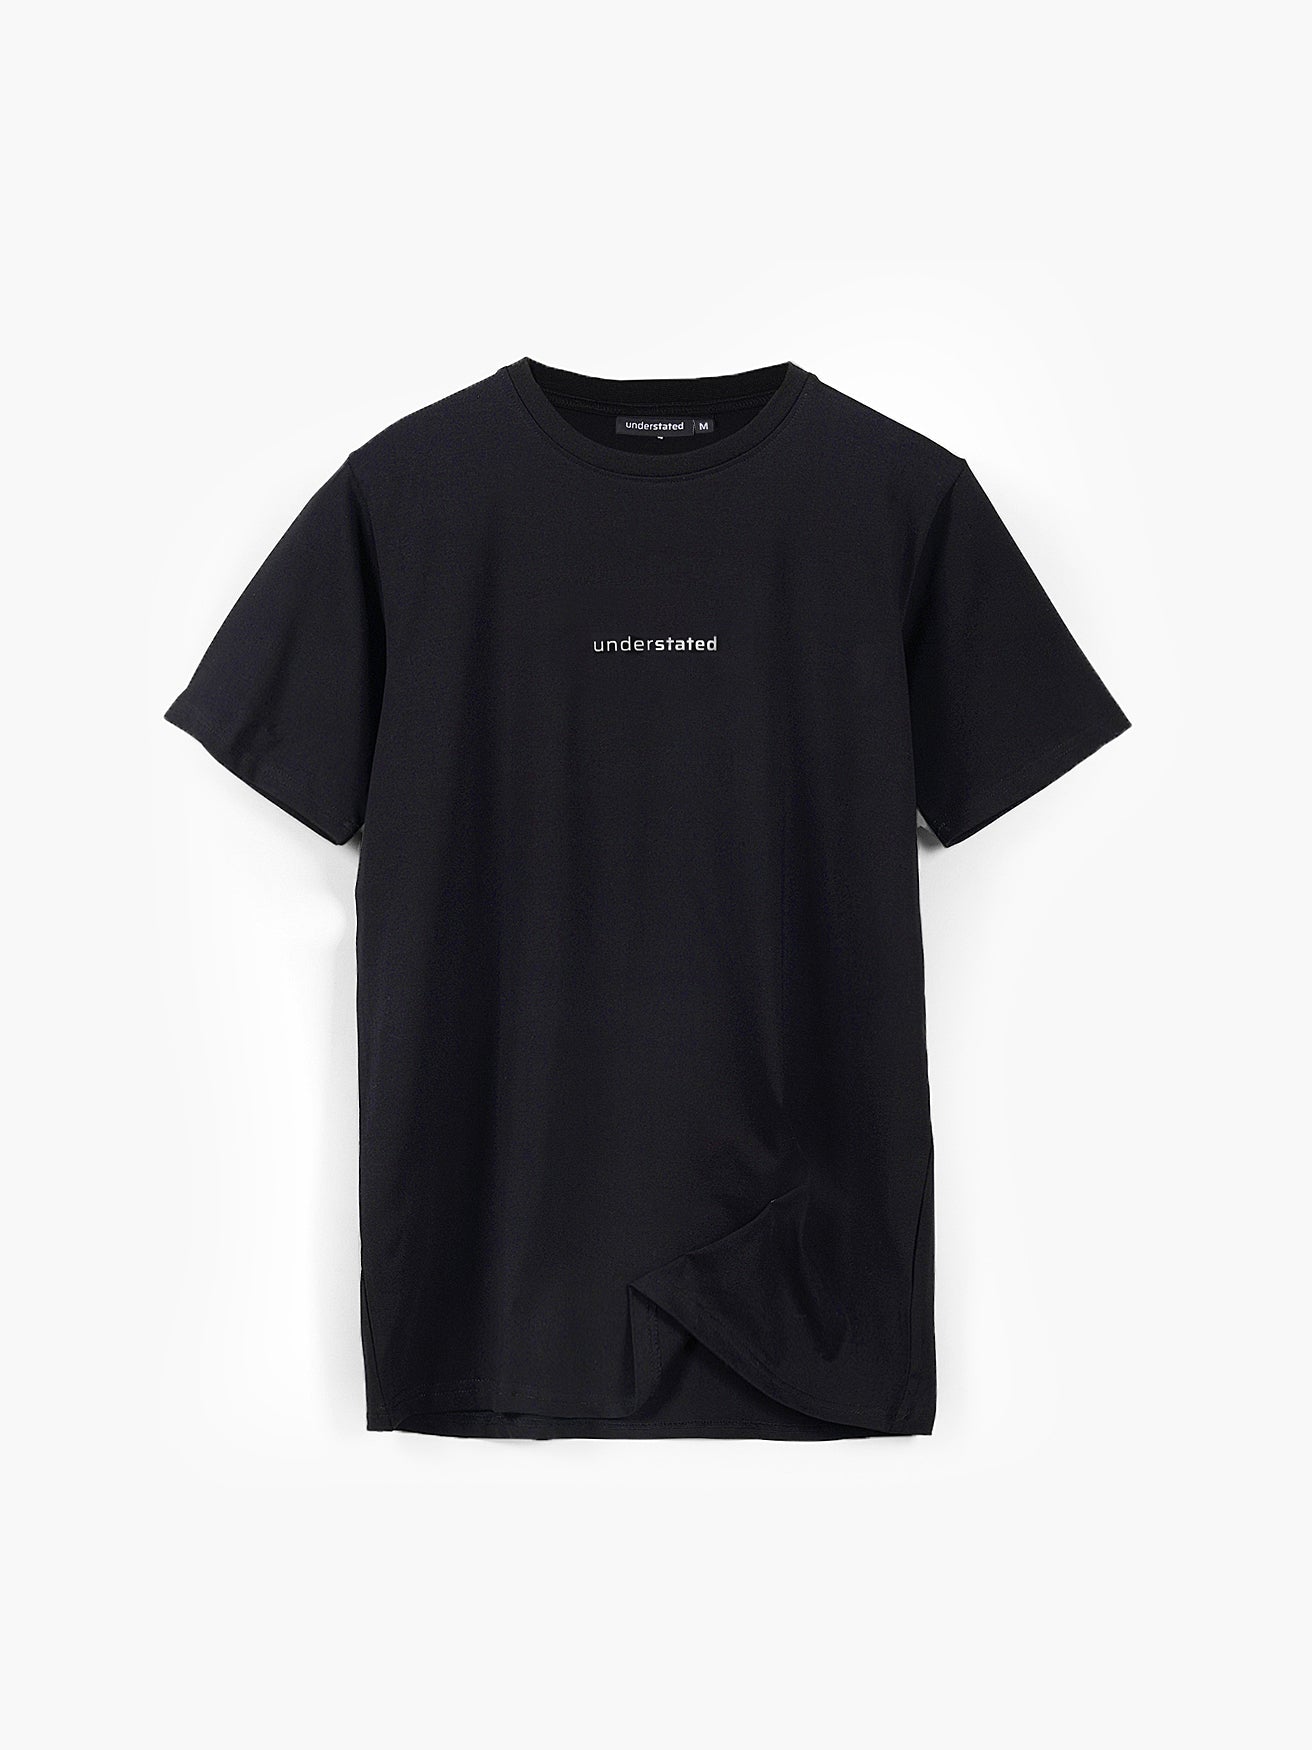 Understated / Regular T-Shirt (Black)